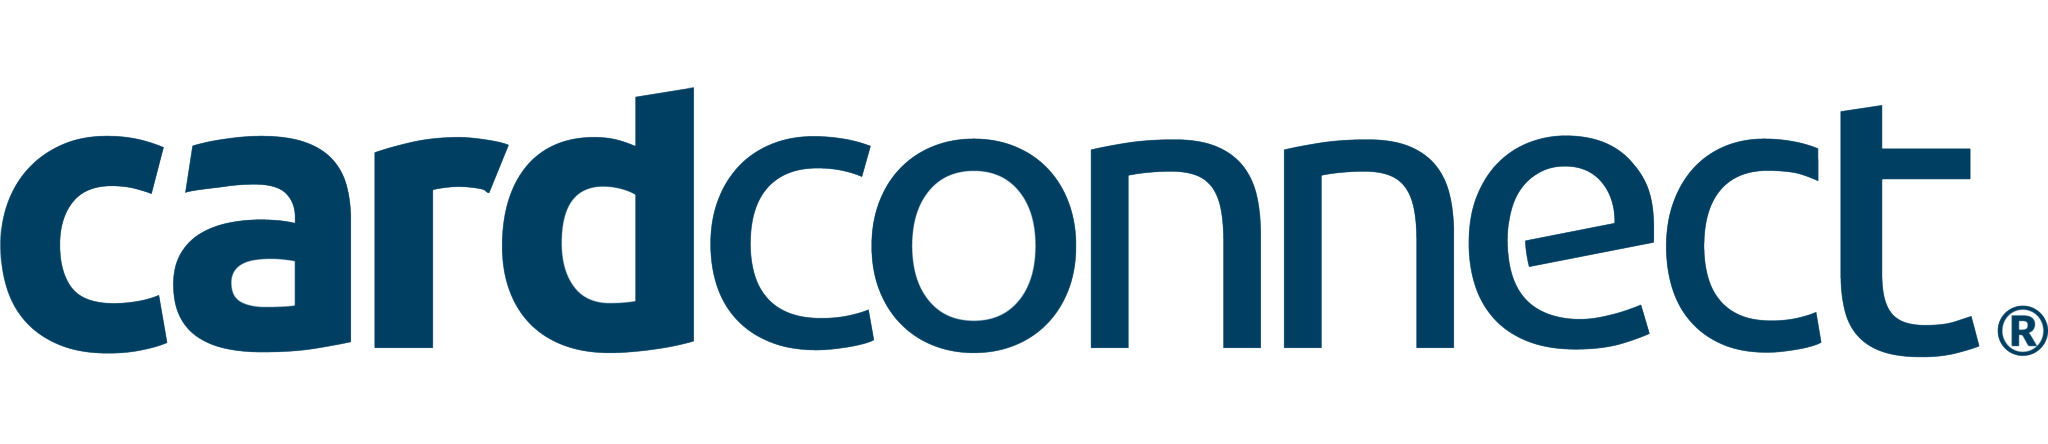 CardConnect-Logo-1